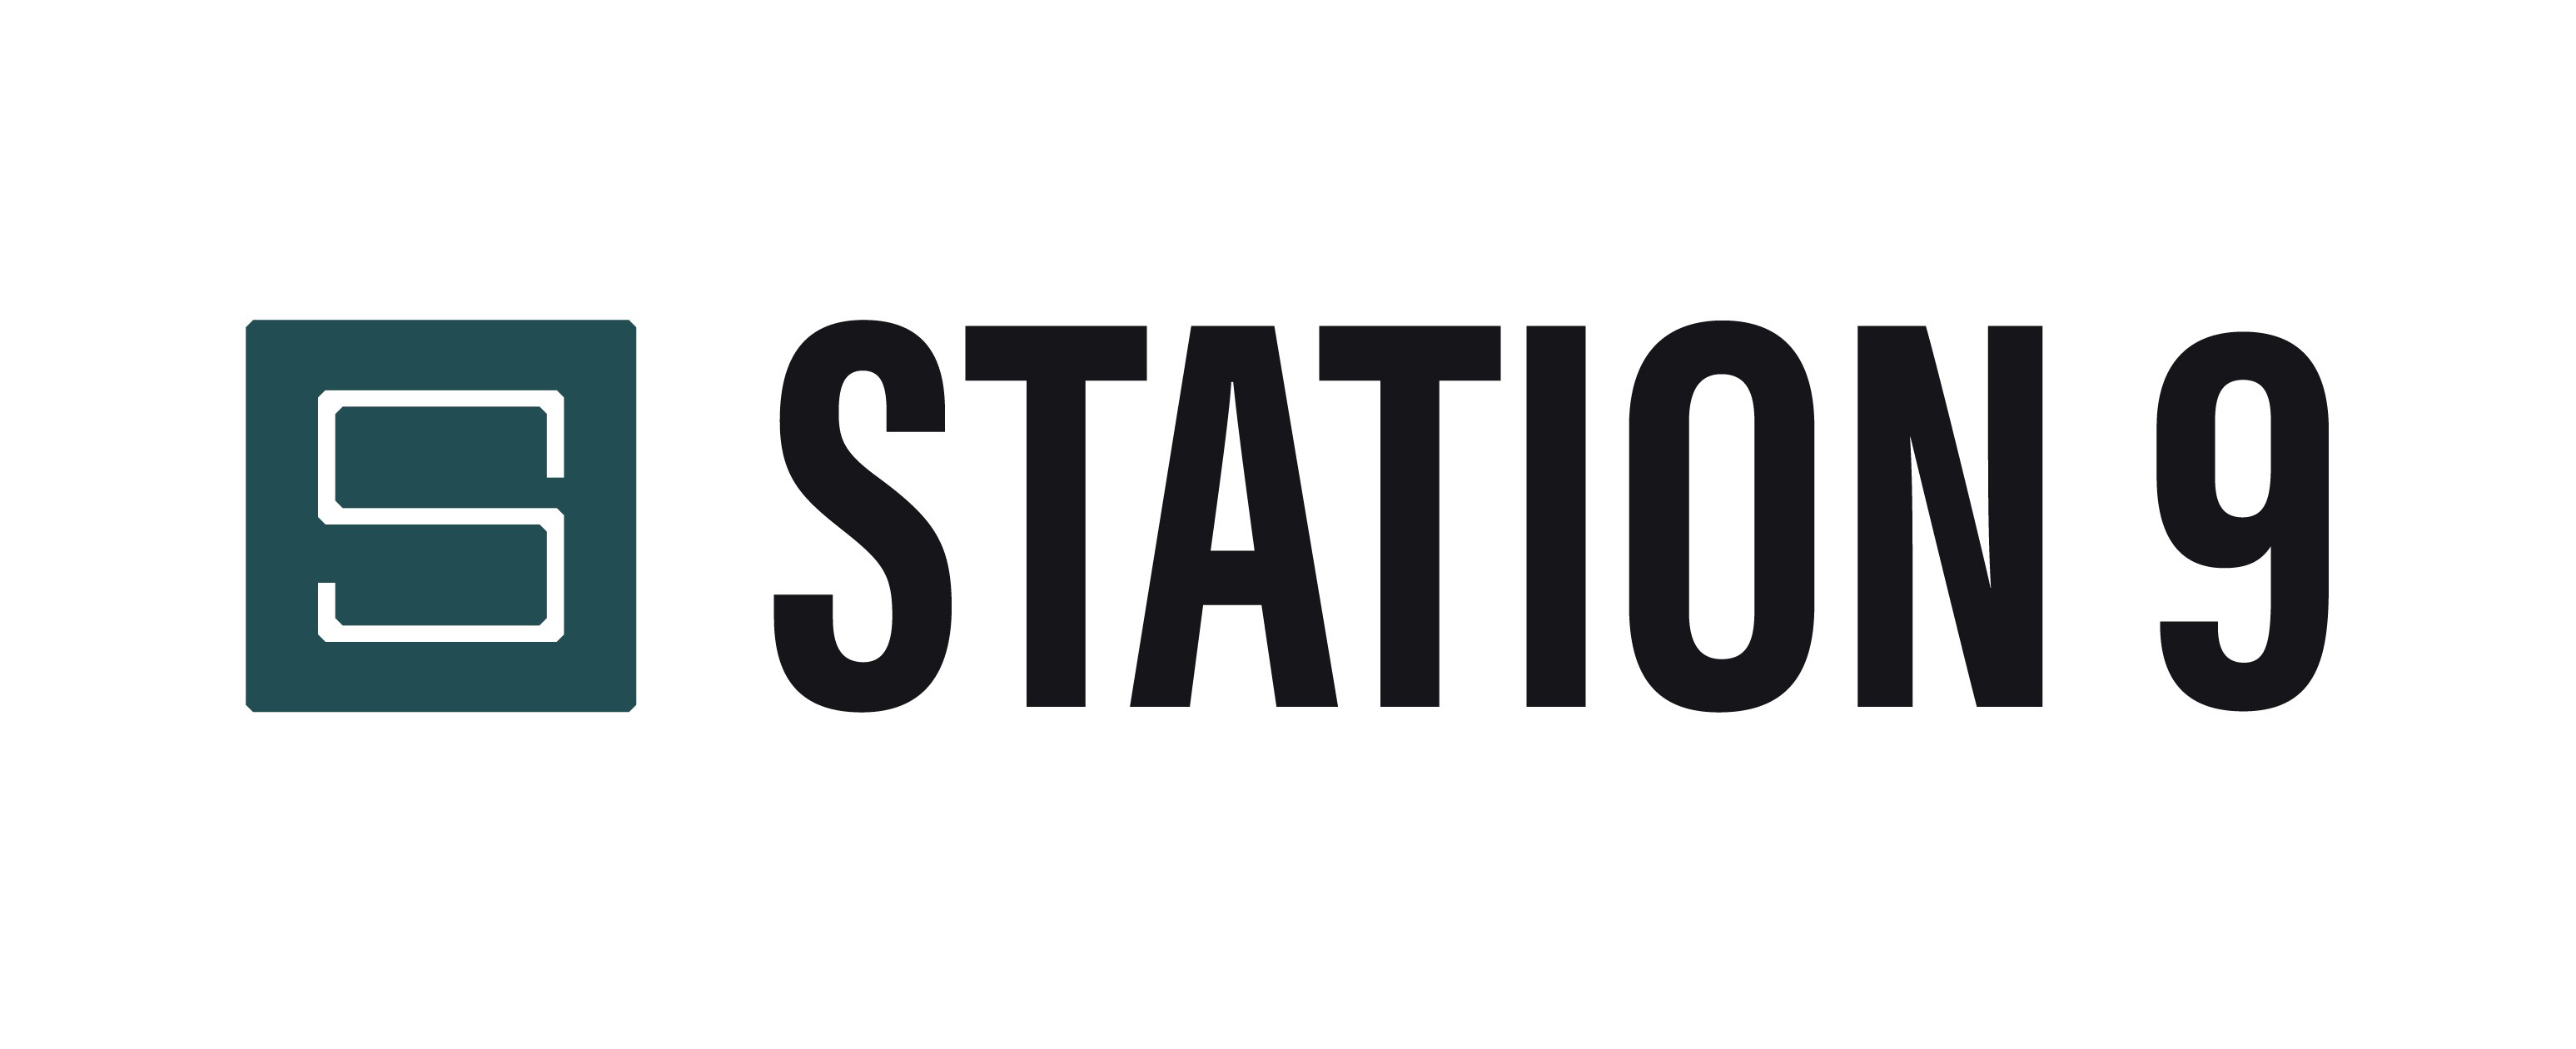 Station 9